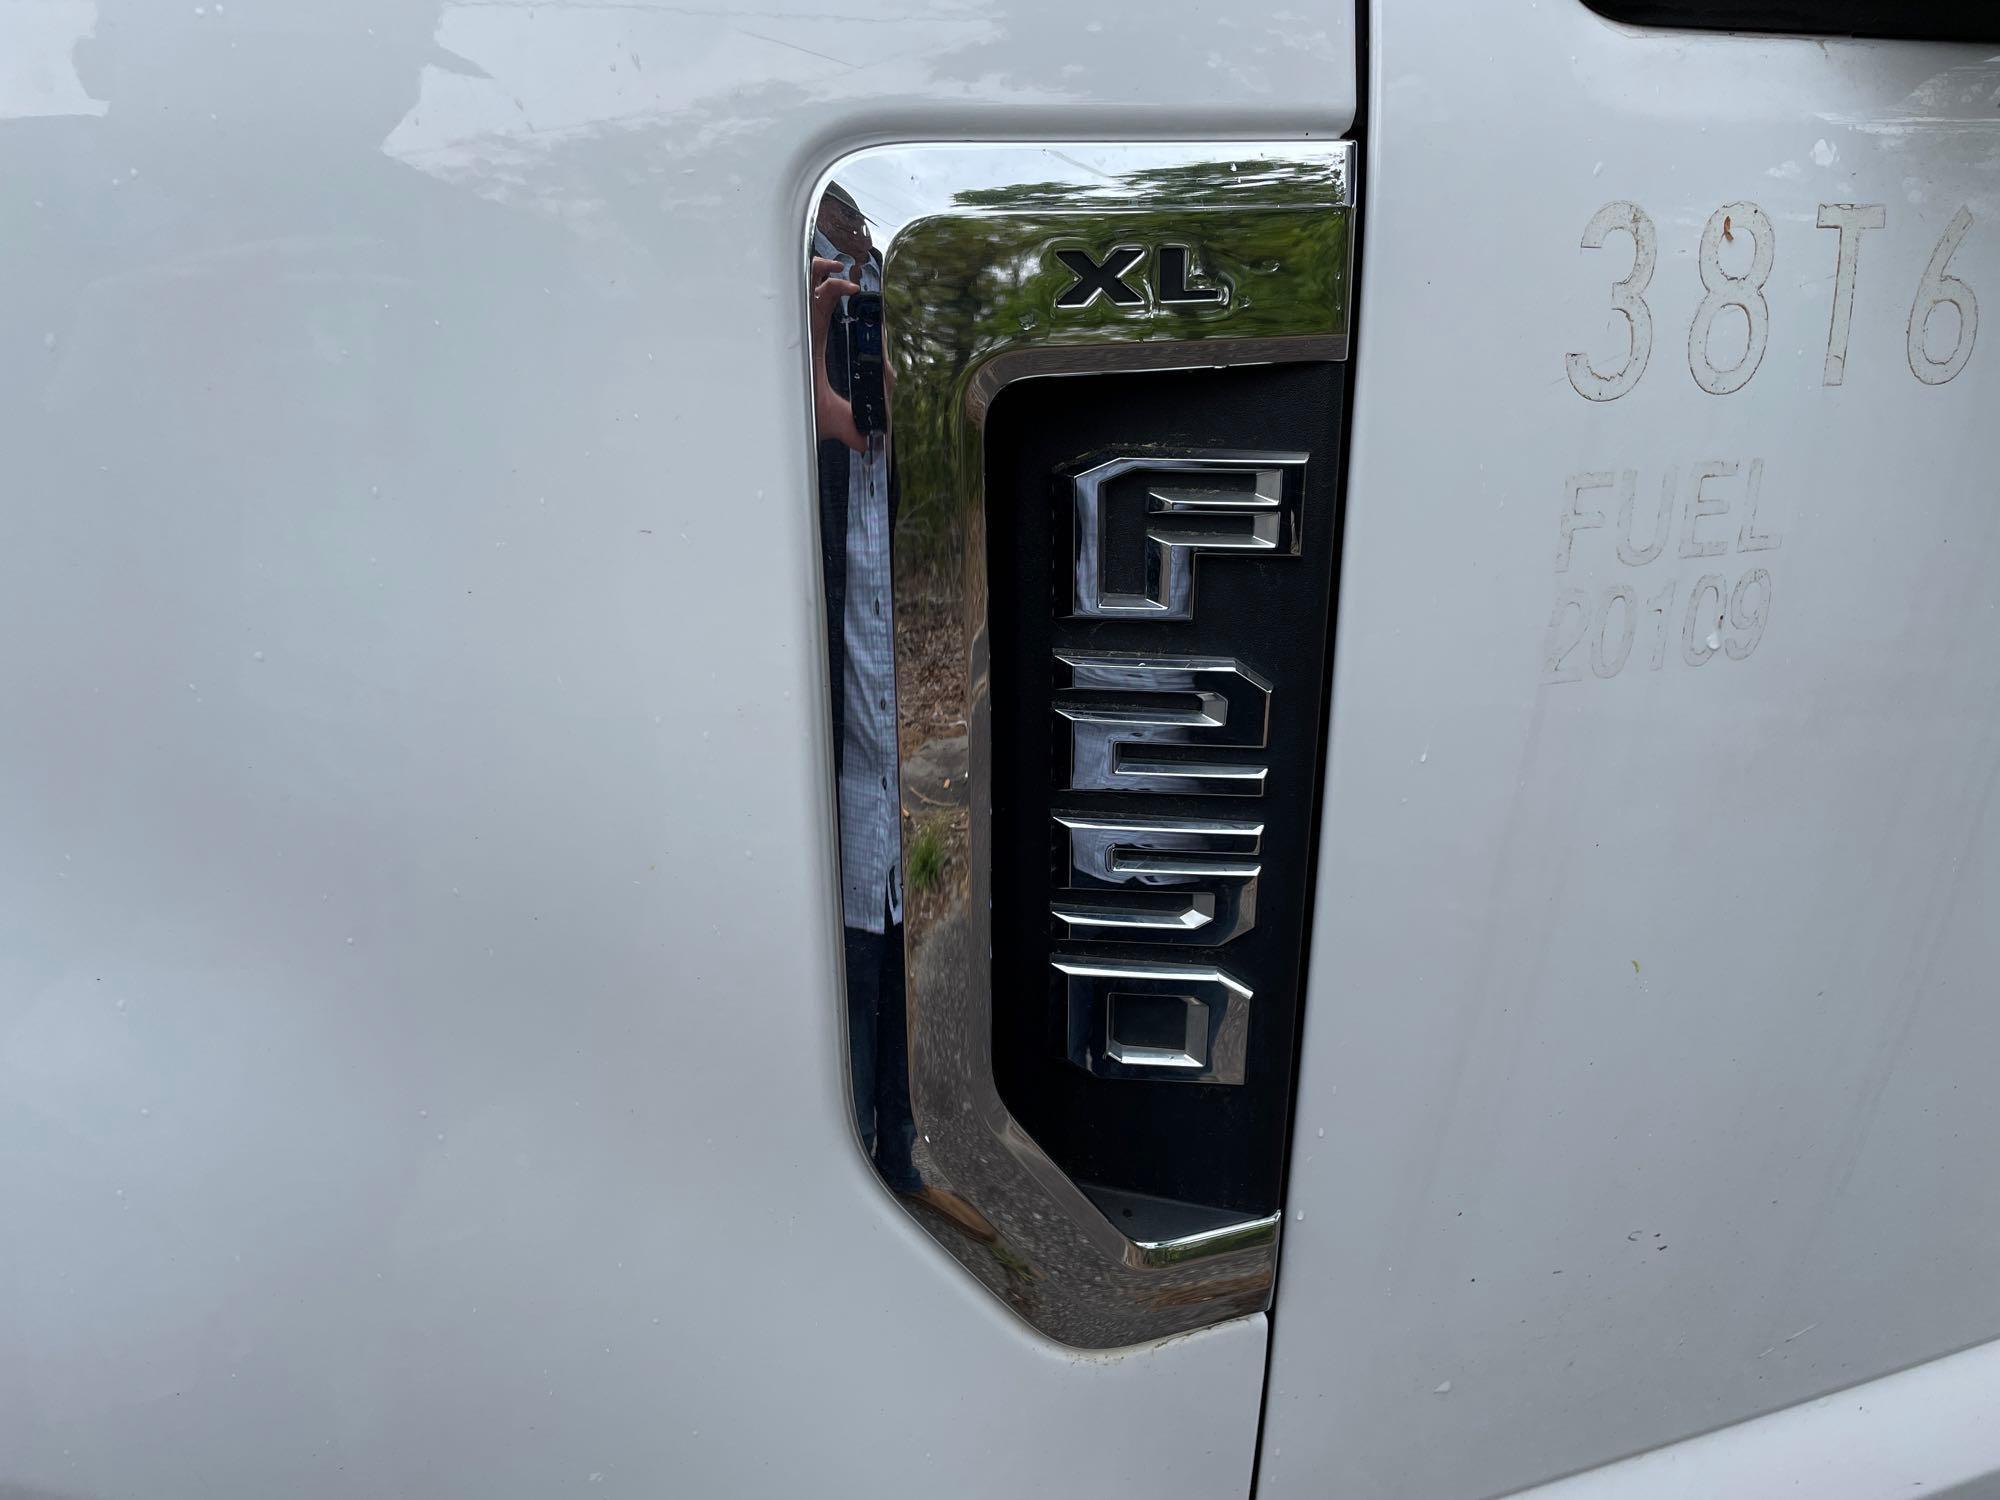 2017 Ford F-250 Pickup Truck, VIN # 1FT7W2B63HEE48774